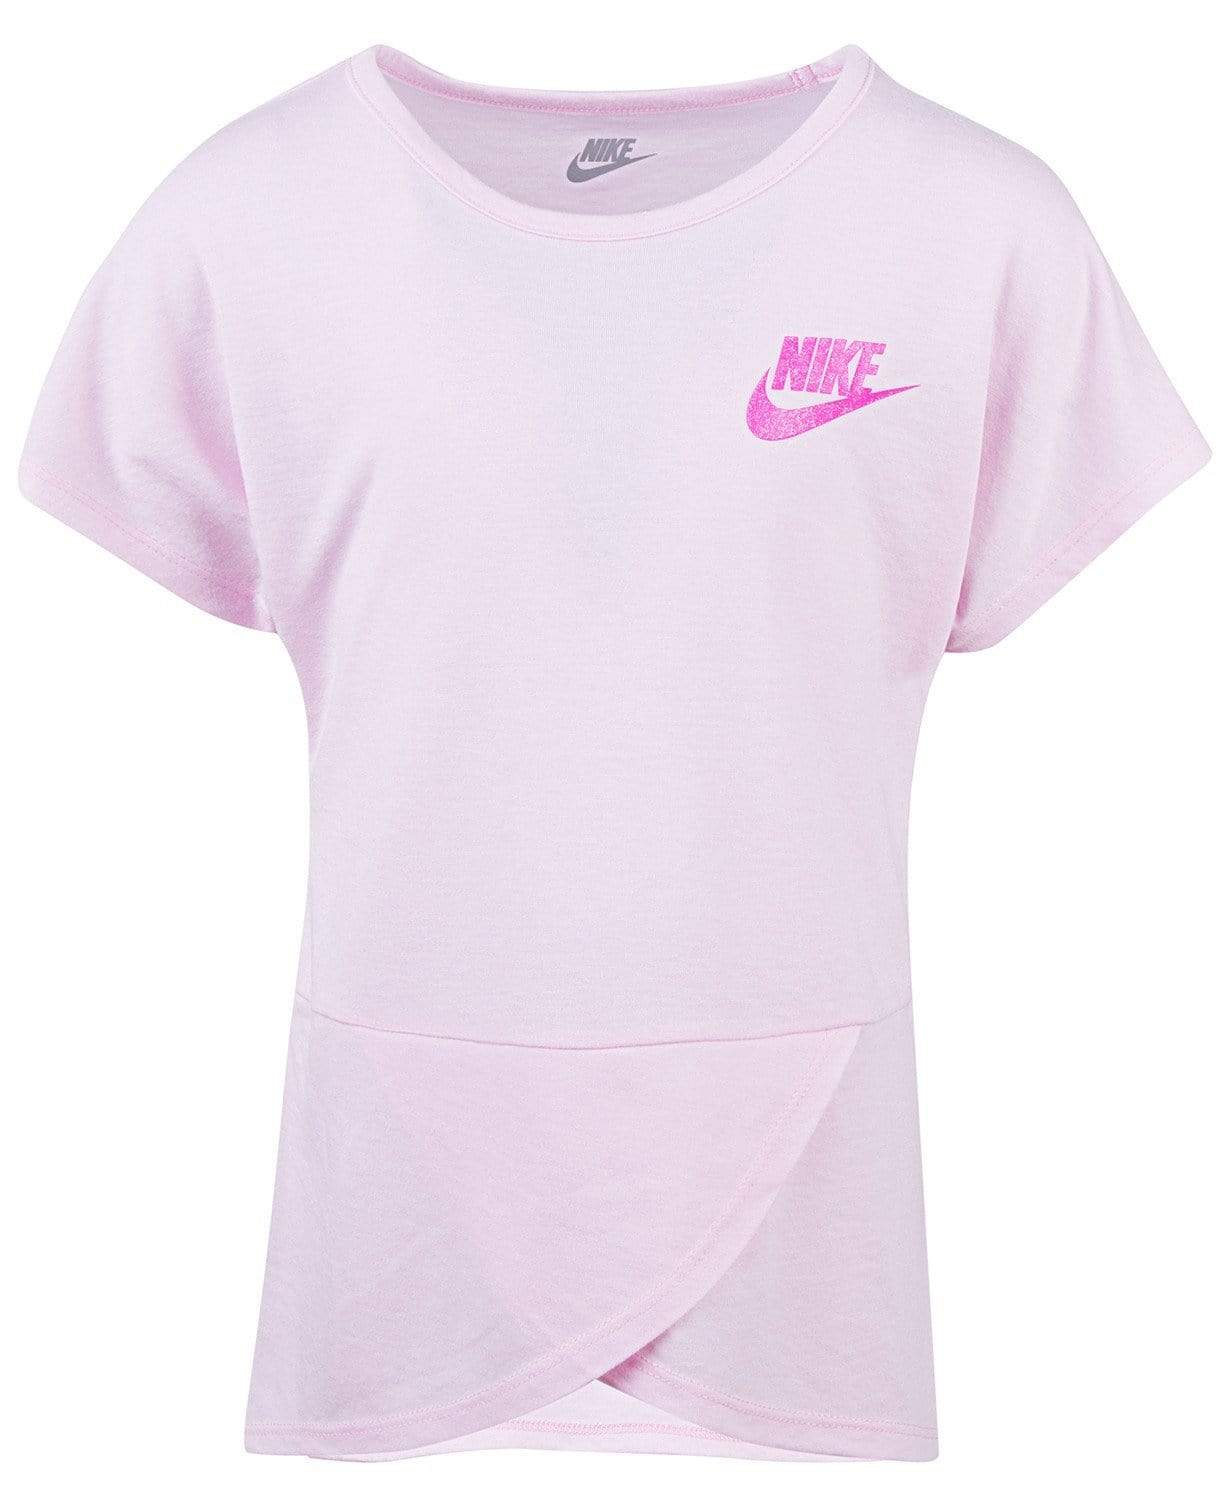 Nike Apparel 3-4 Years Kids - Futura Crossover T-Shirt